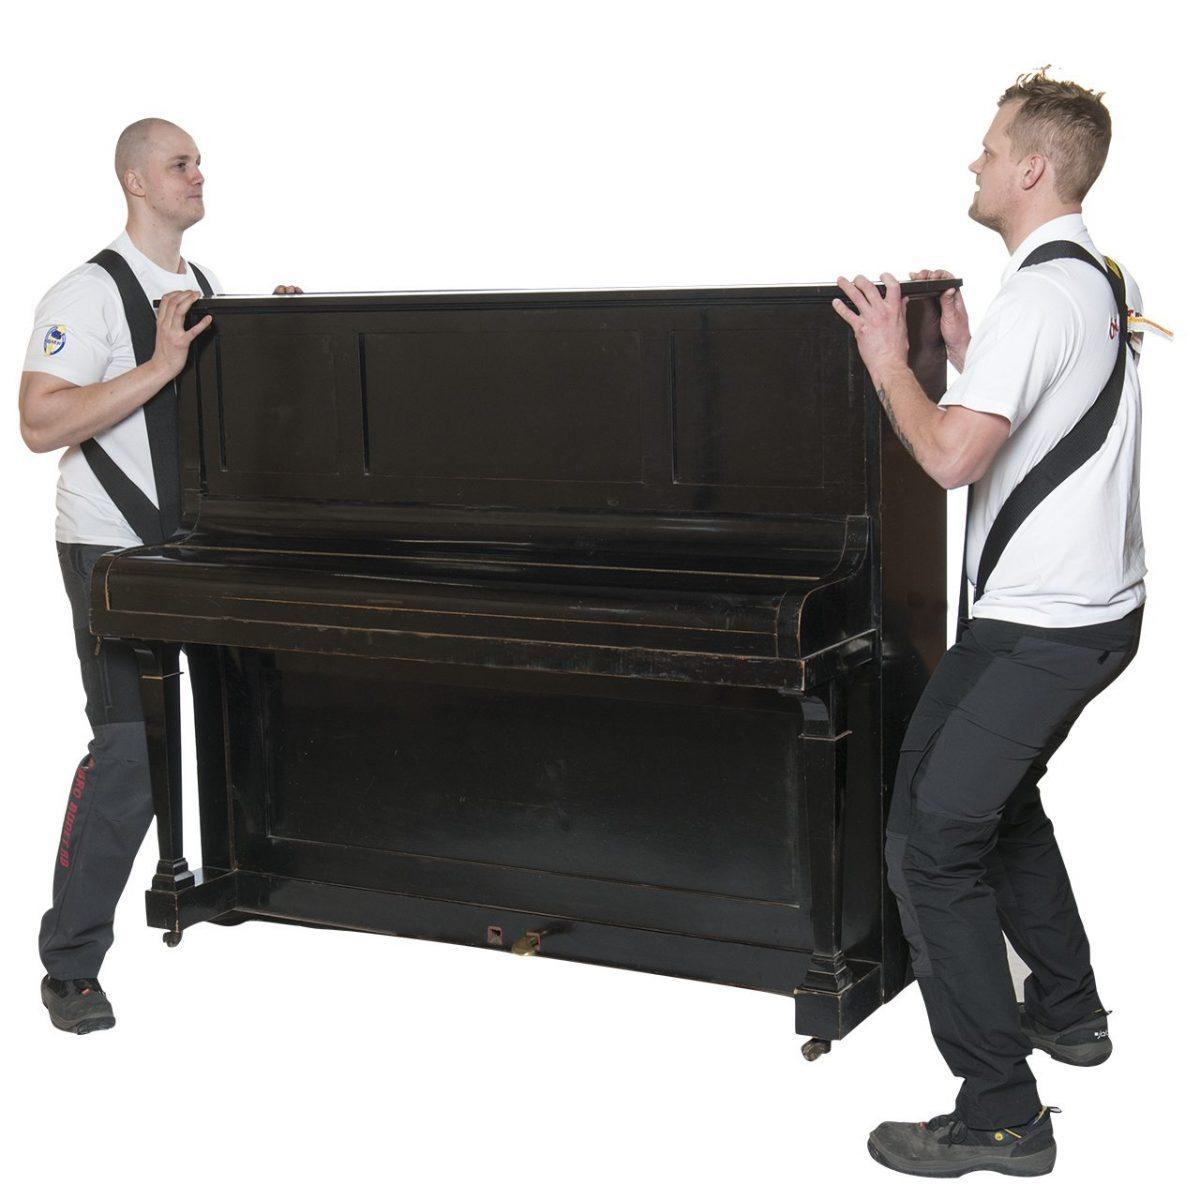 Piano Moving Services in Perth, AU